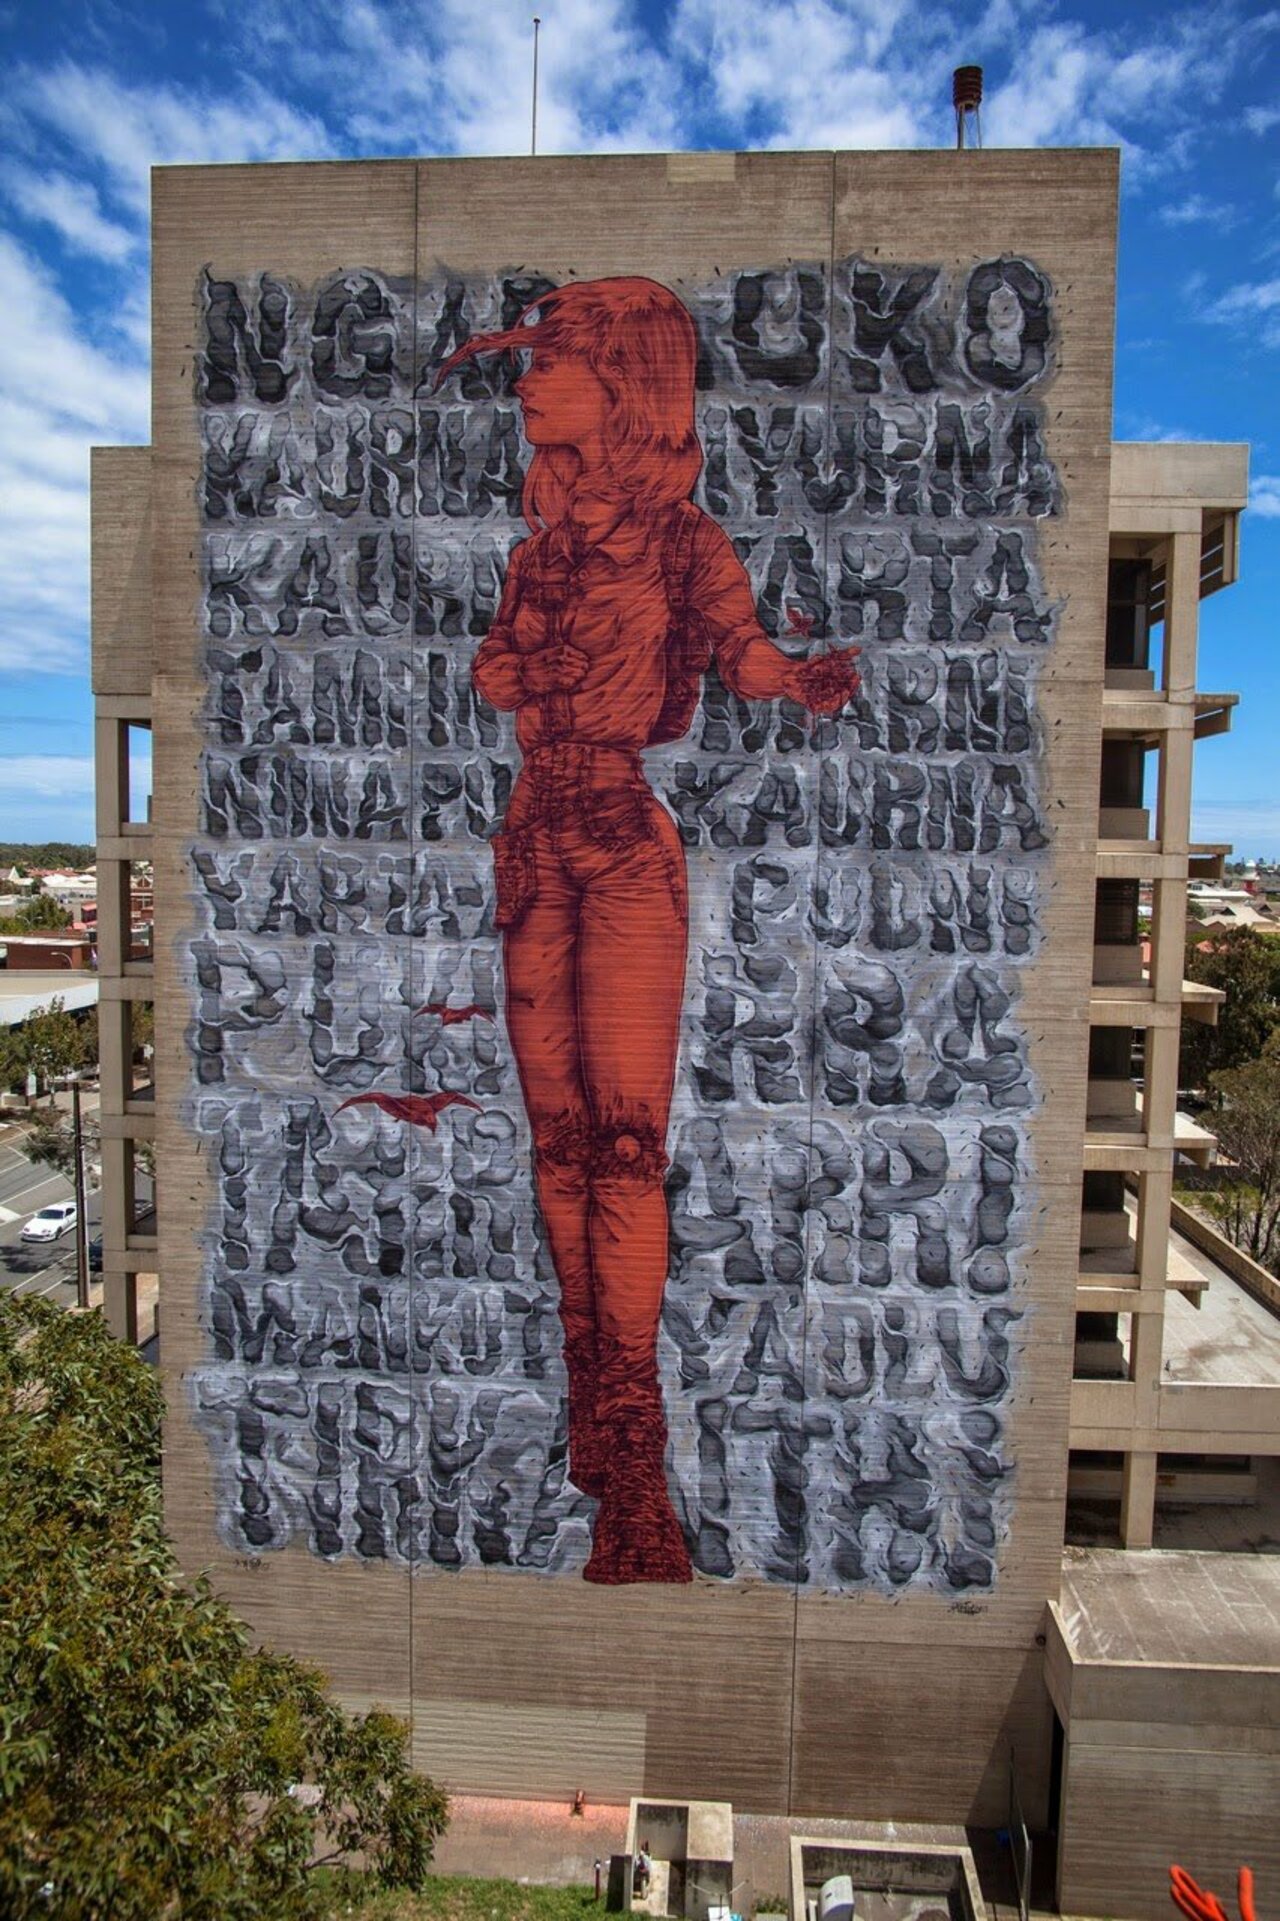 #Mural by Askew & Elliot Stewart #PortAdelaide #Australia #Streetart #urbanart #graffiti #art https://t.co/W7HrJPJWpb